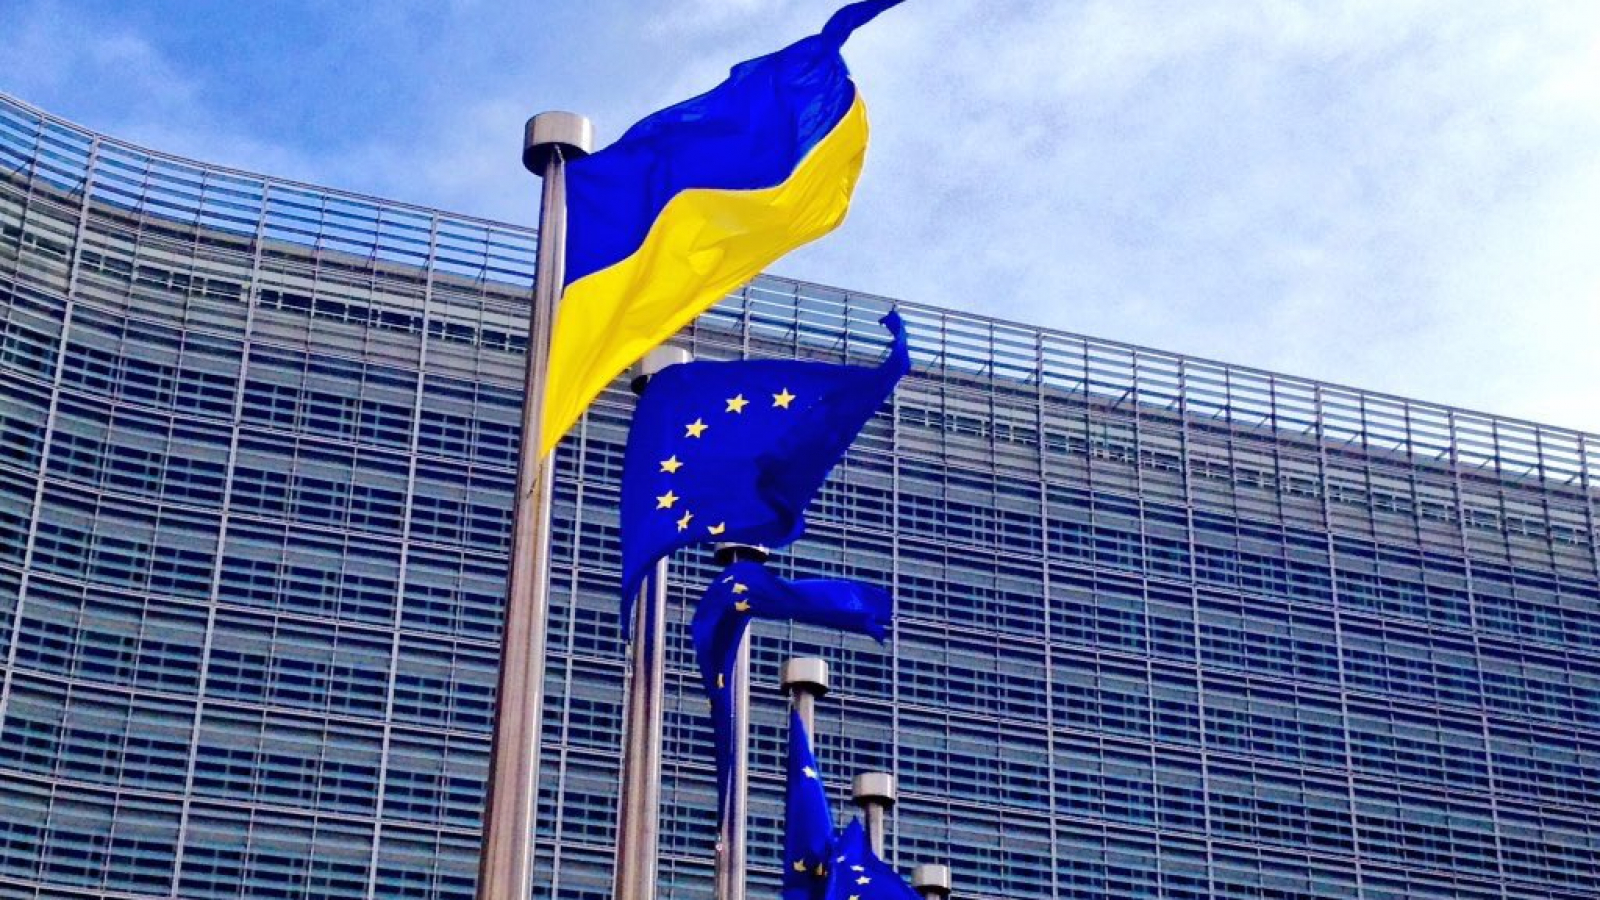 Ukraine gets closer to accession negotiations with EU